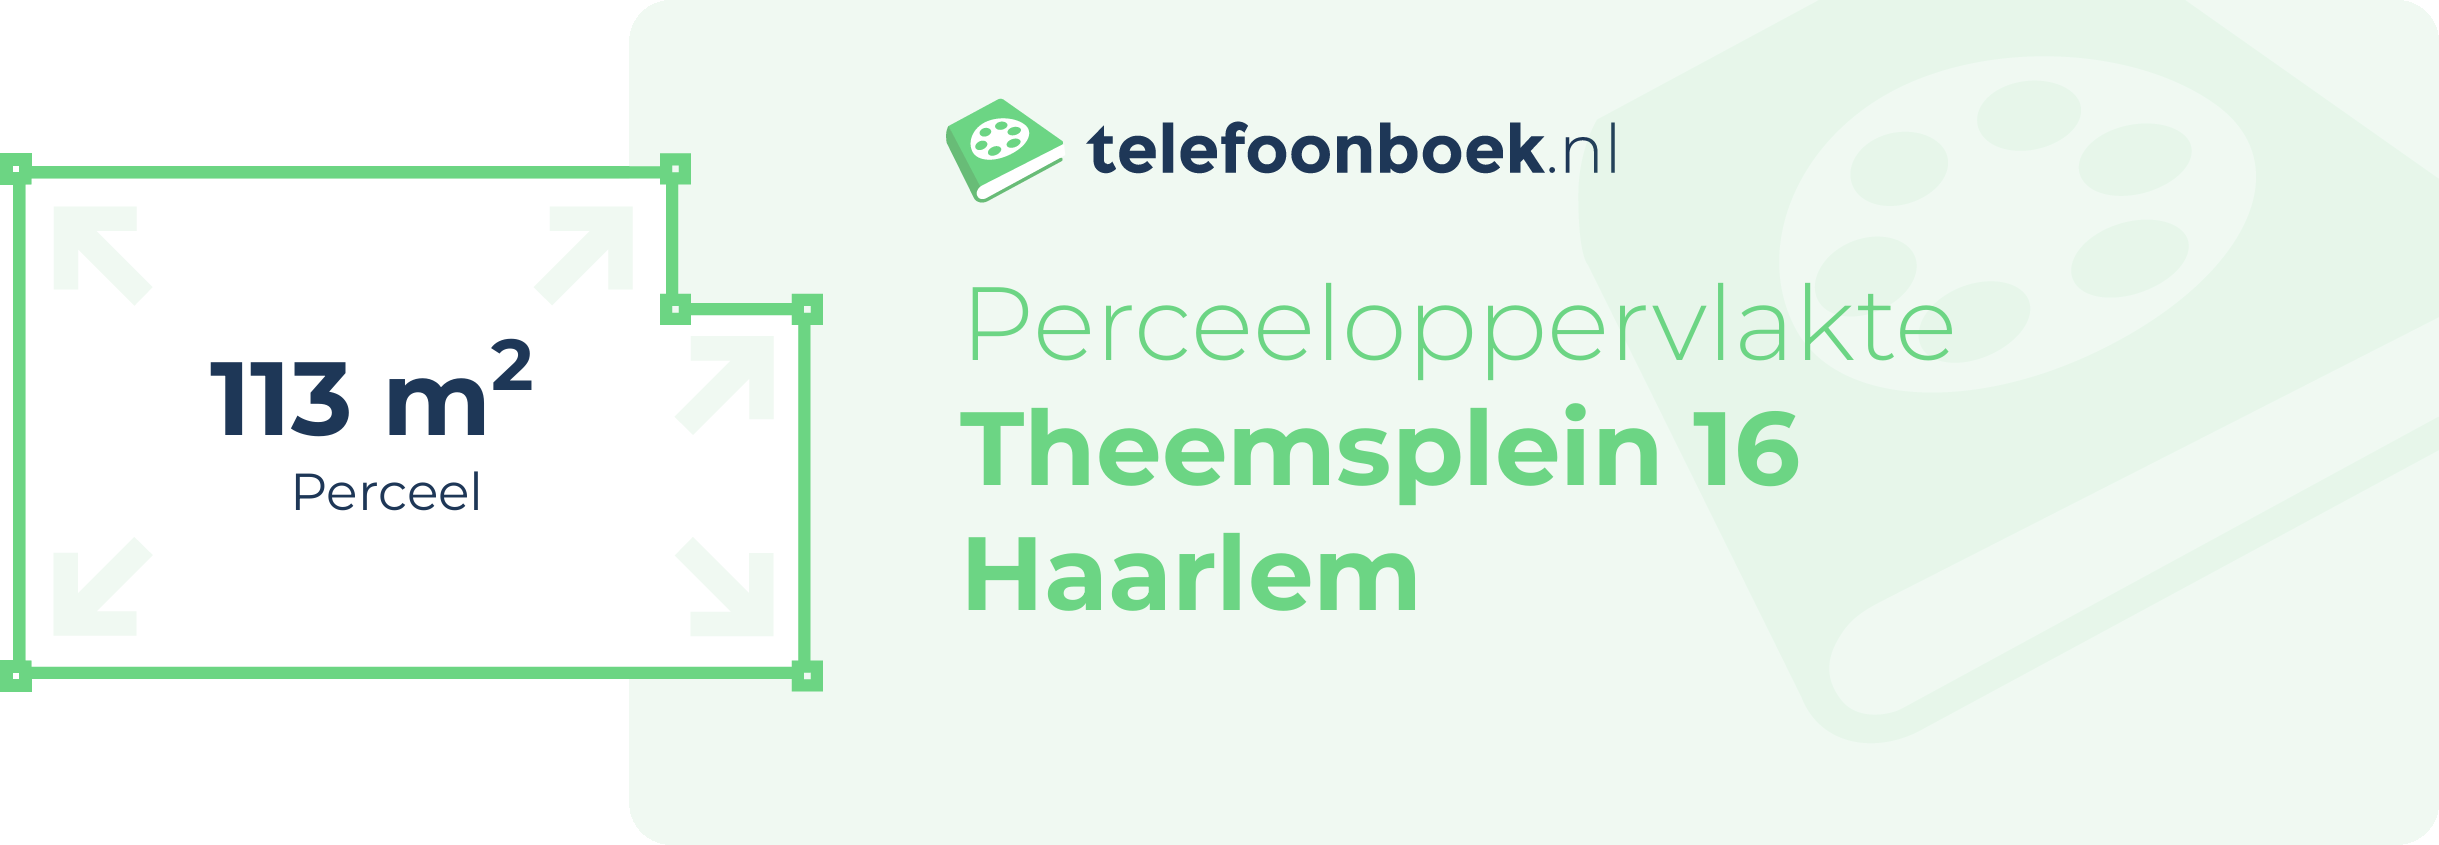 Perceeloppervlakte Theemsplein 16 Haarlem